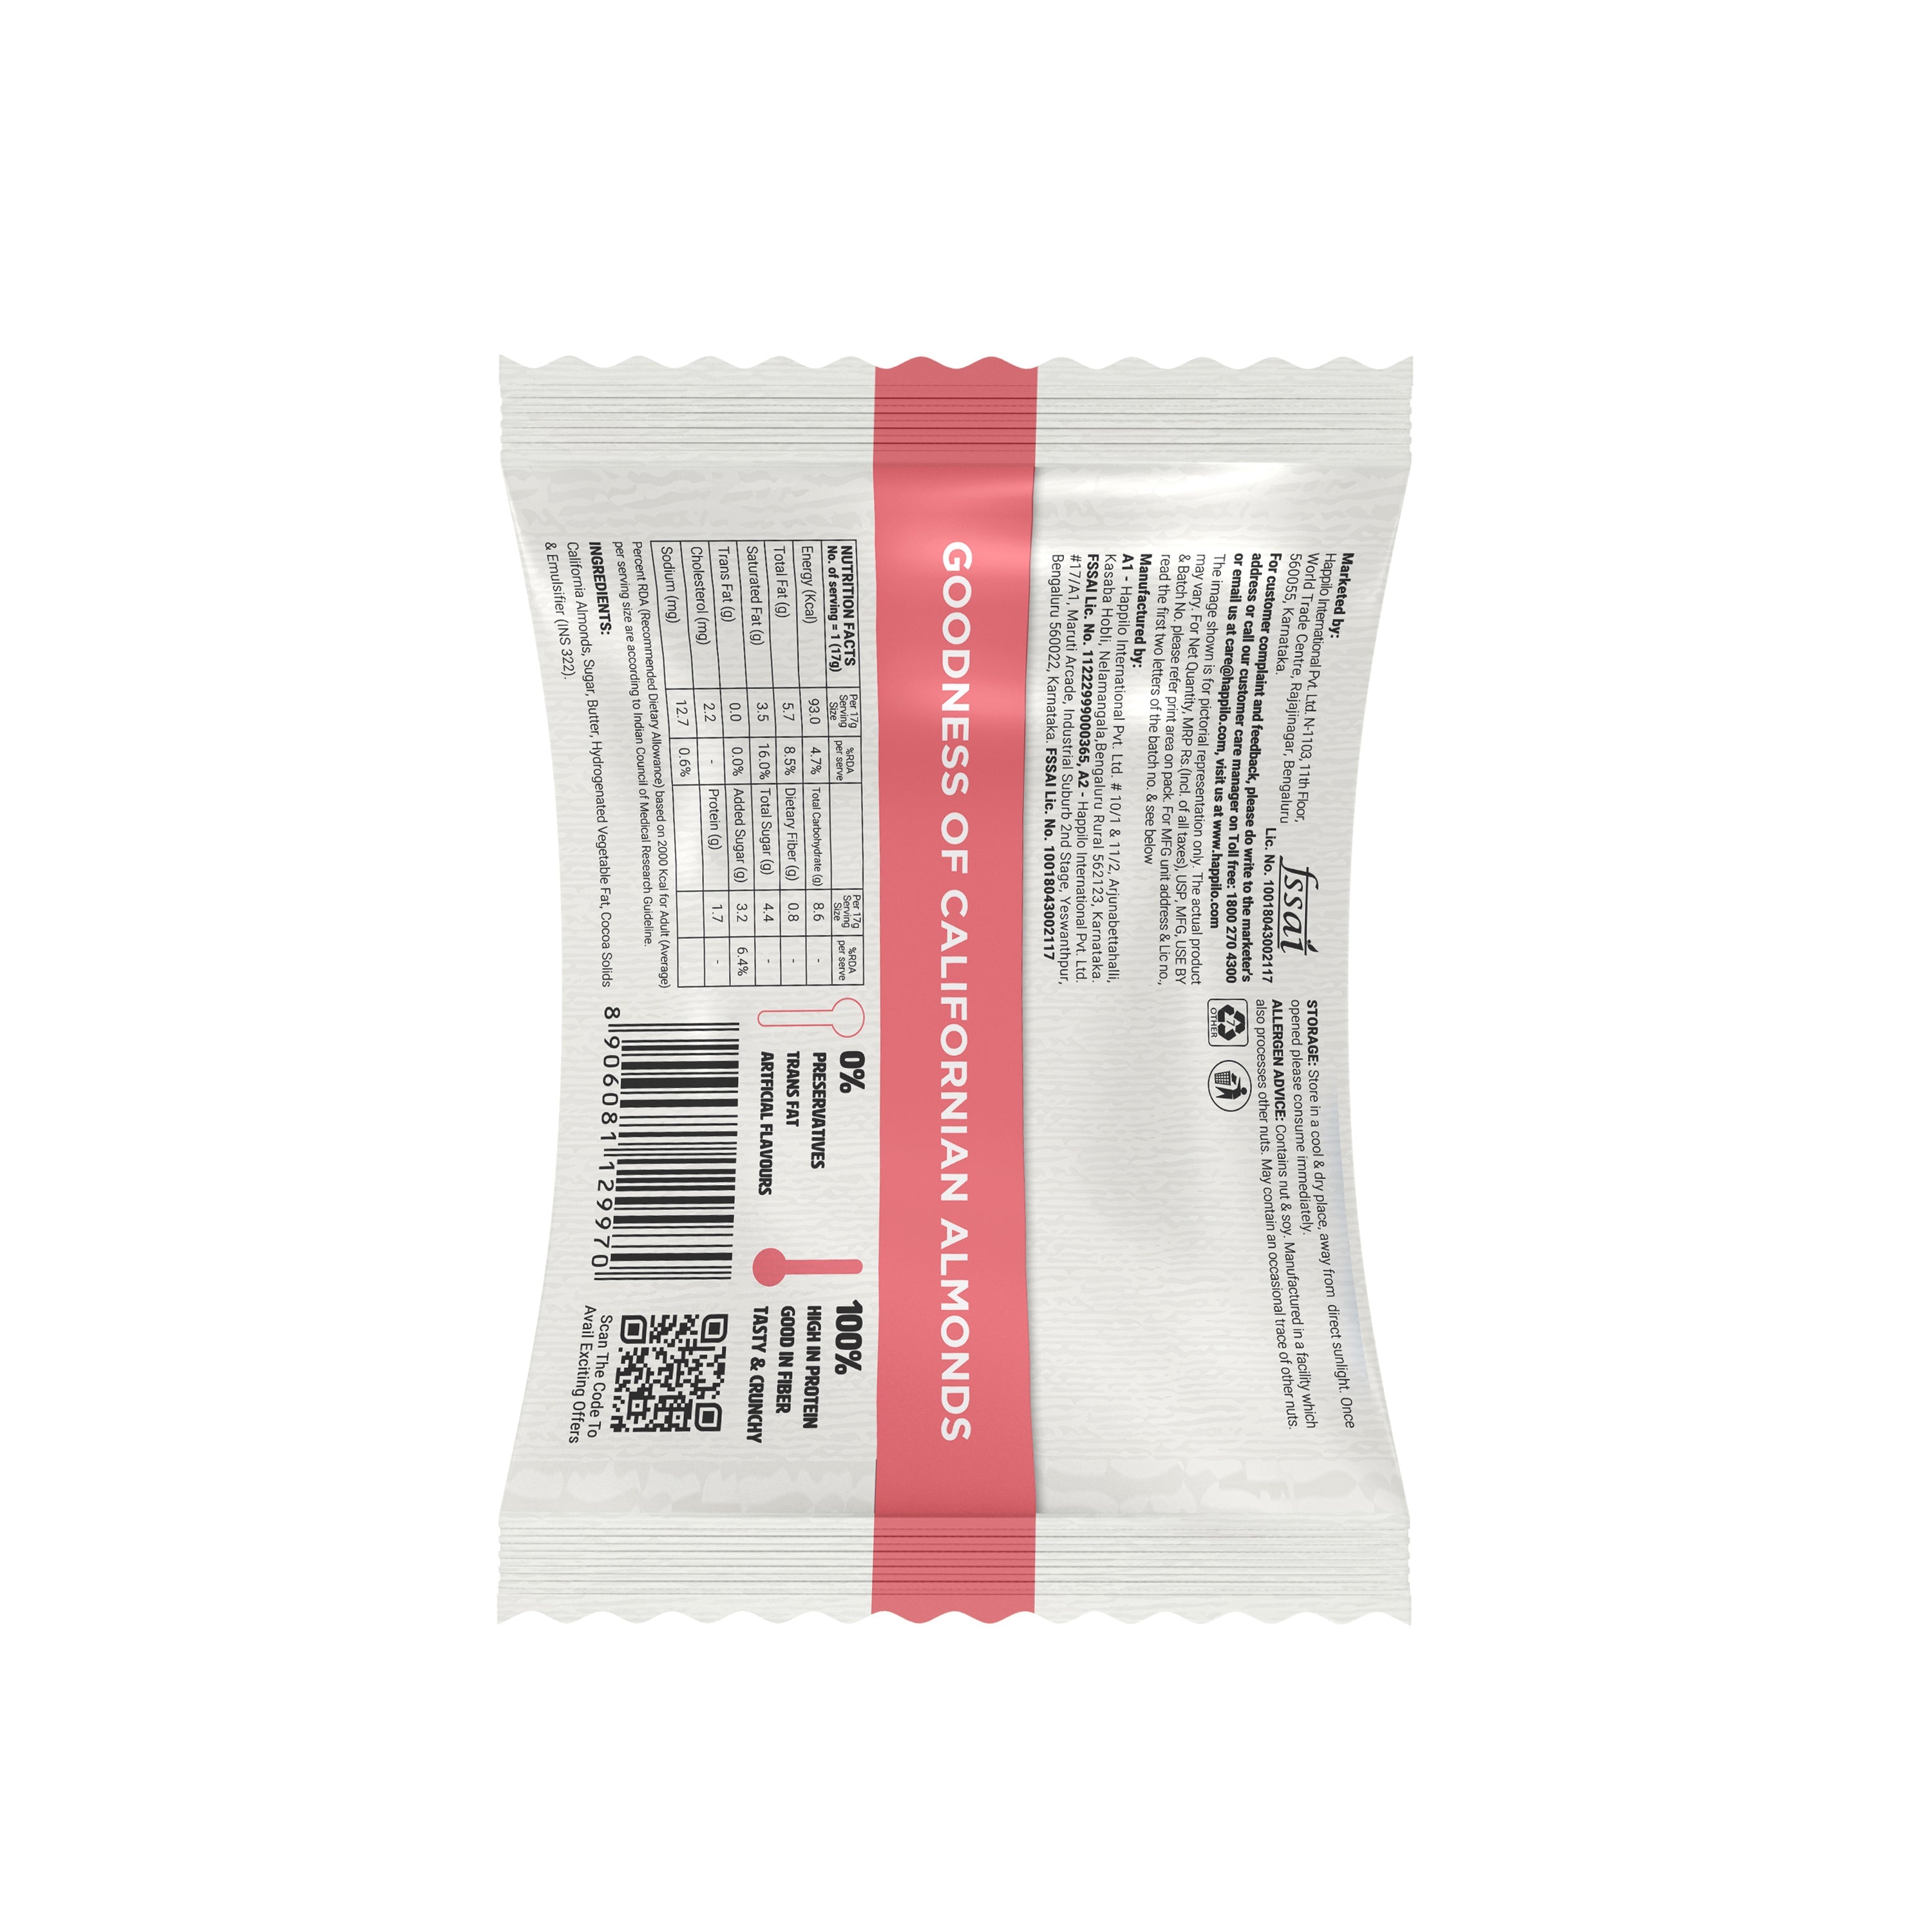 Happilo Premium Almond Brittle Celebrations Pack 204g (17gX12)